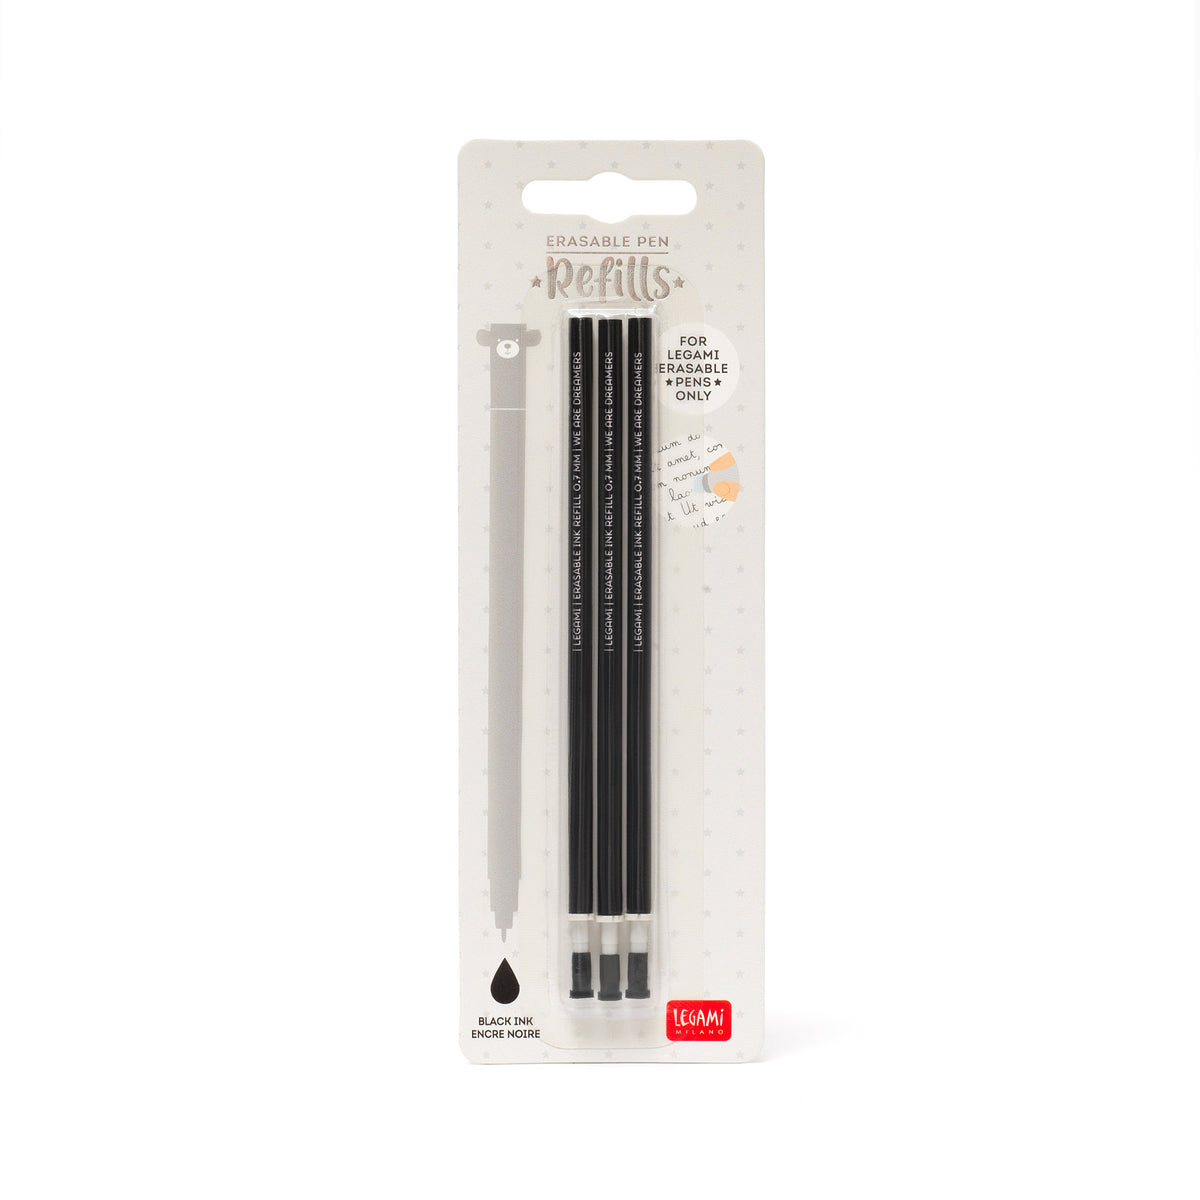 Legami Erasable Gel Pen Refills - black in packaging